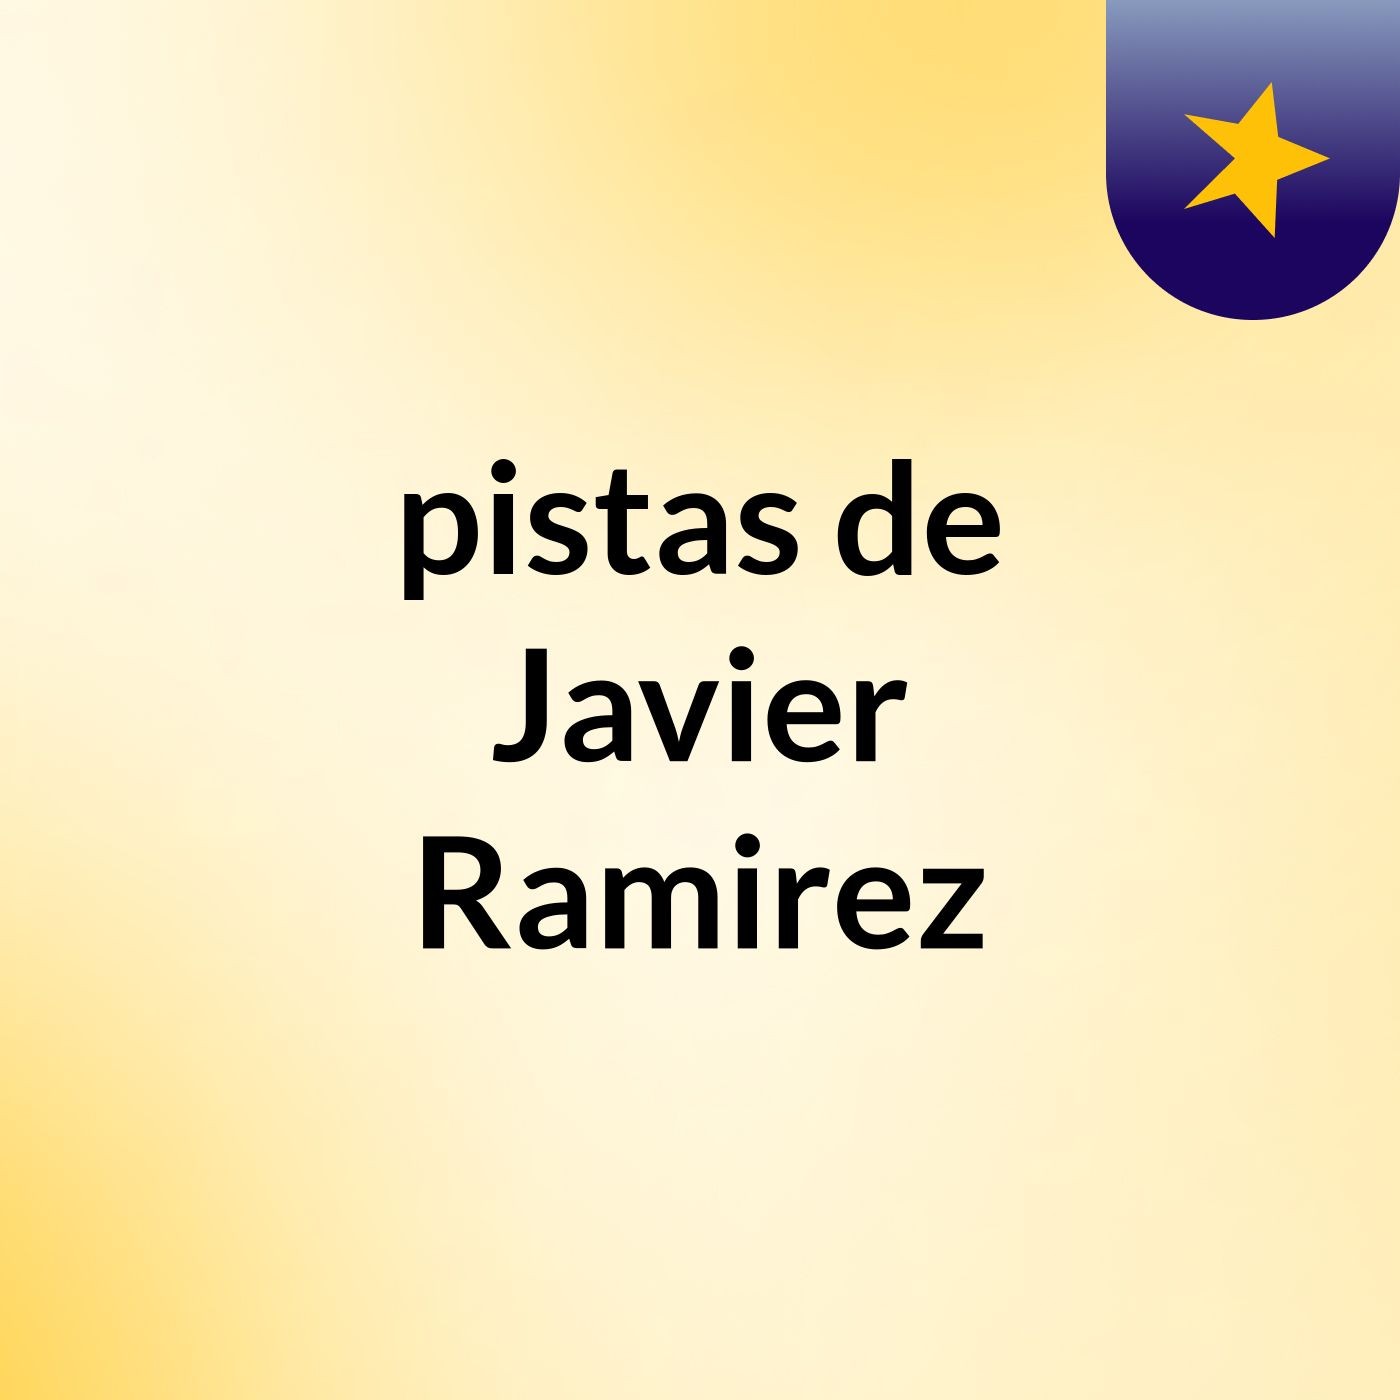 pistas de Javier Ramirez